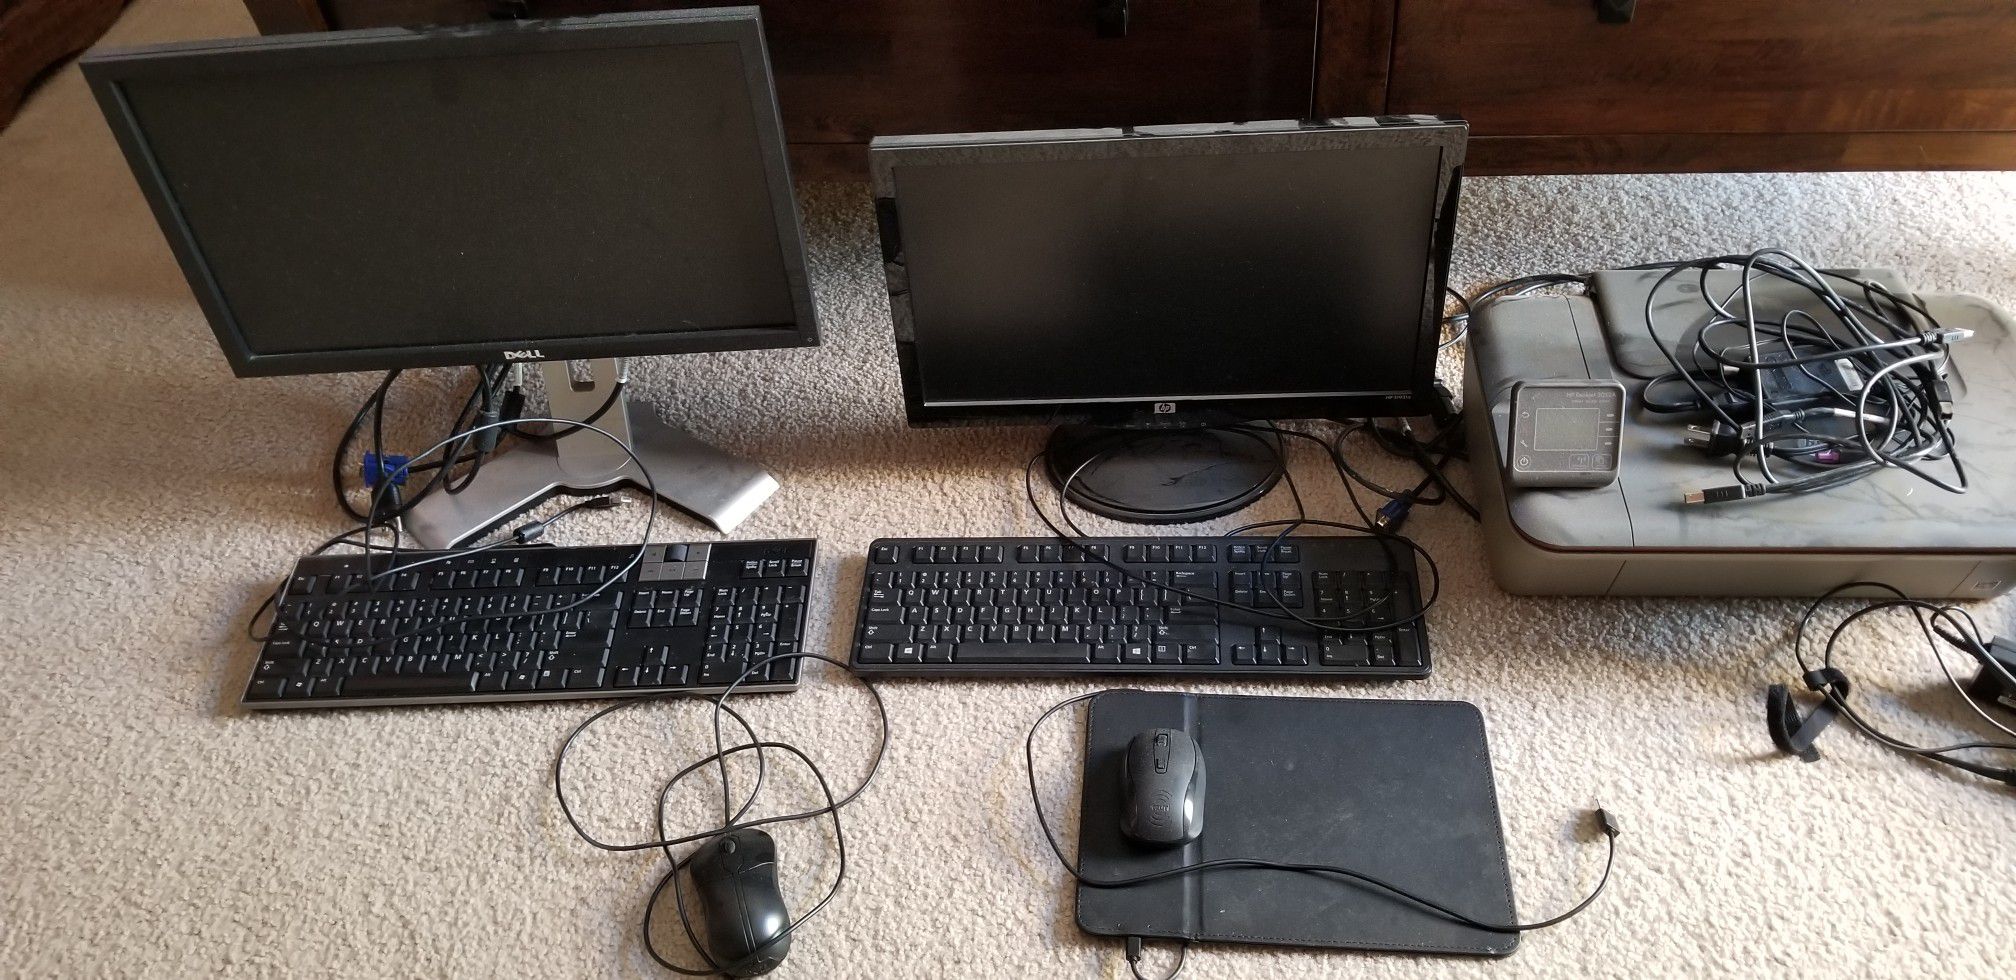 Computer monitors, keyboards, mouses, laptop, printer